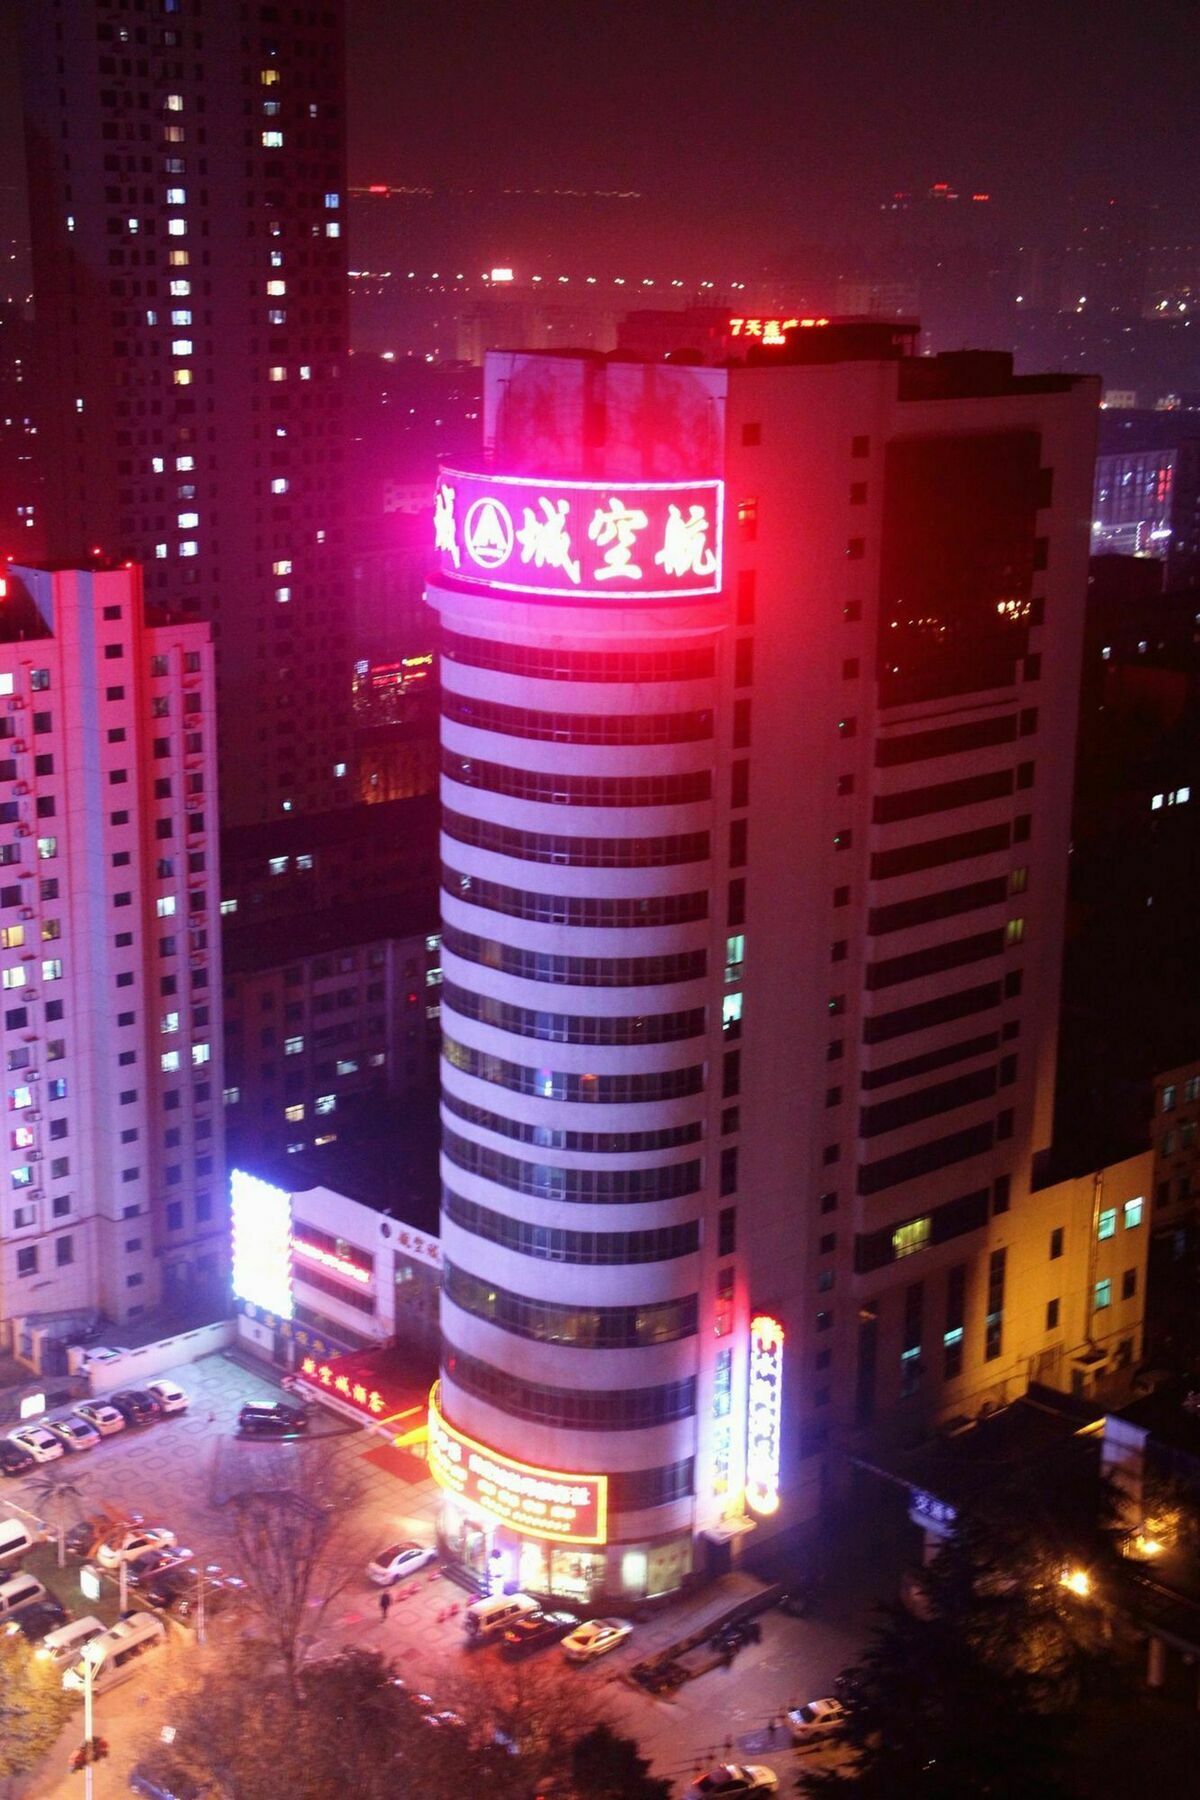 Luoyang Aviation Hotel 외부 사진